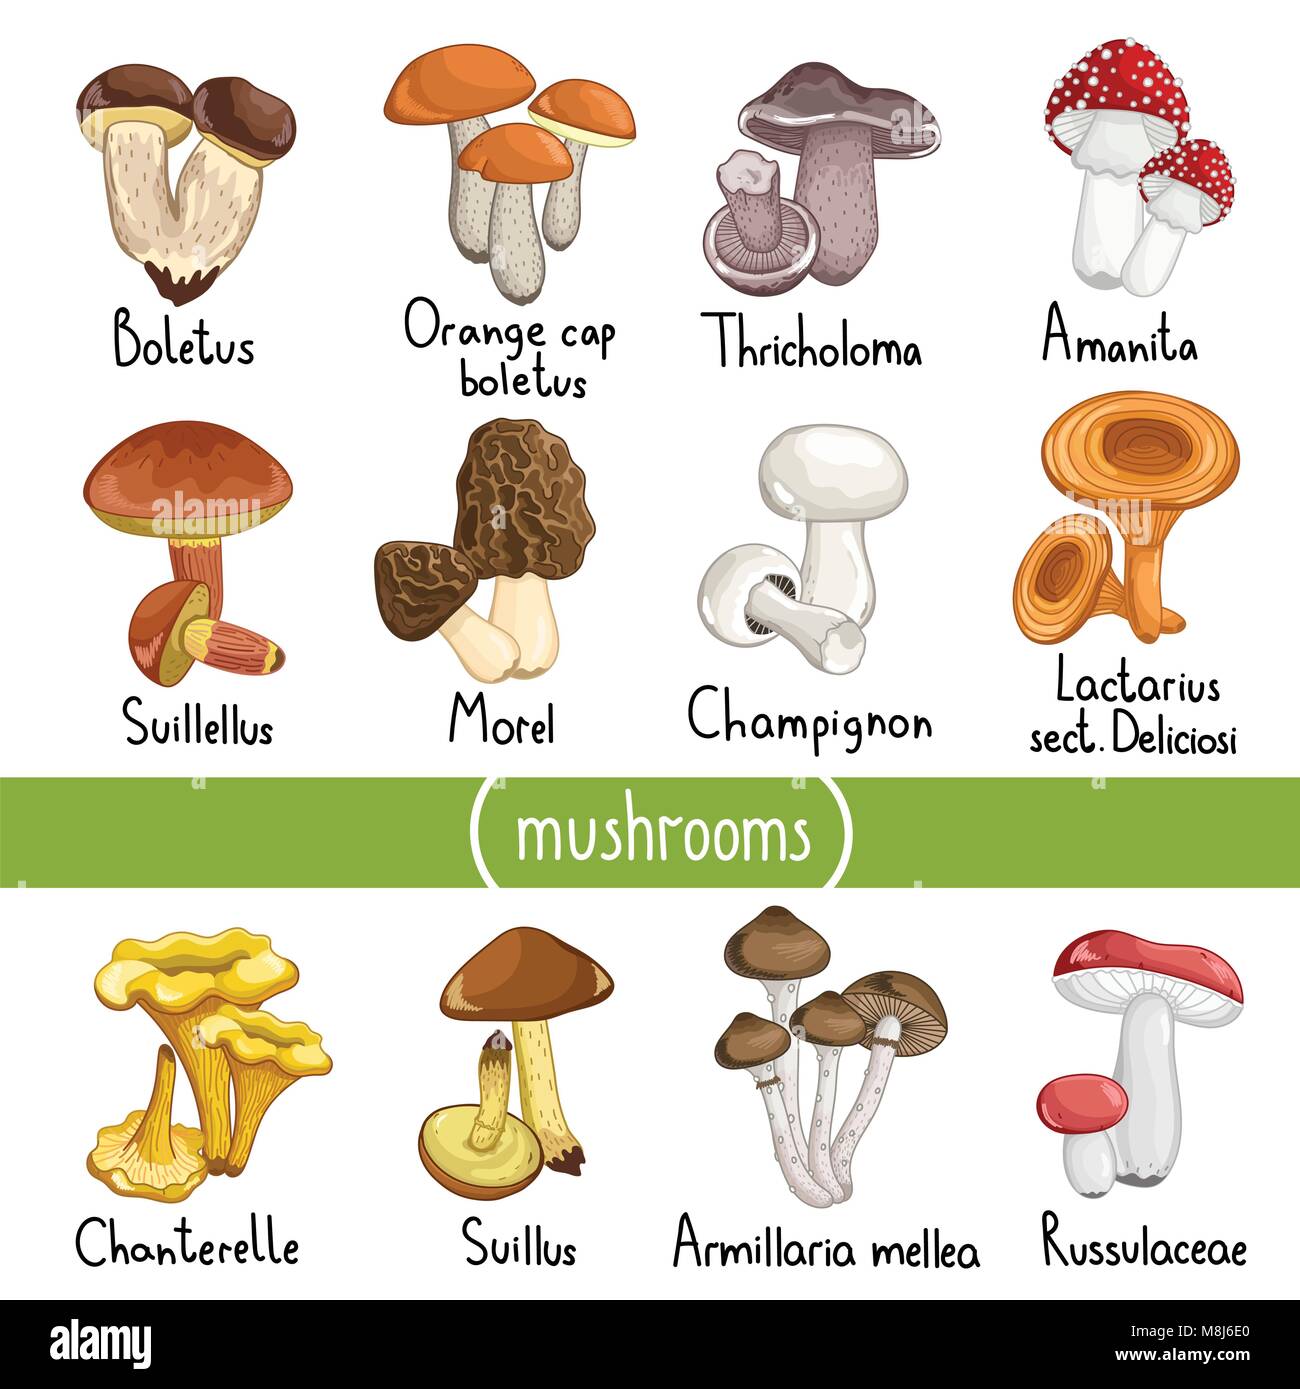 Different types of mushrooms vector illustration Stock Vector